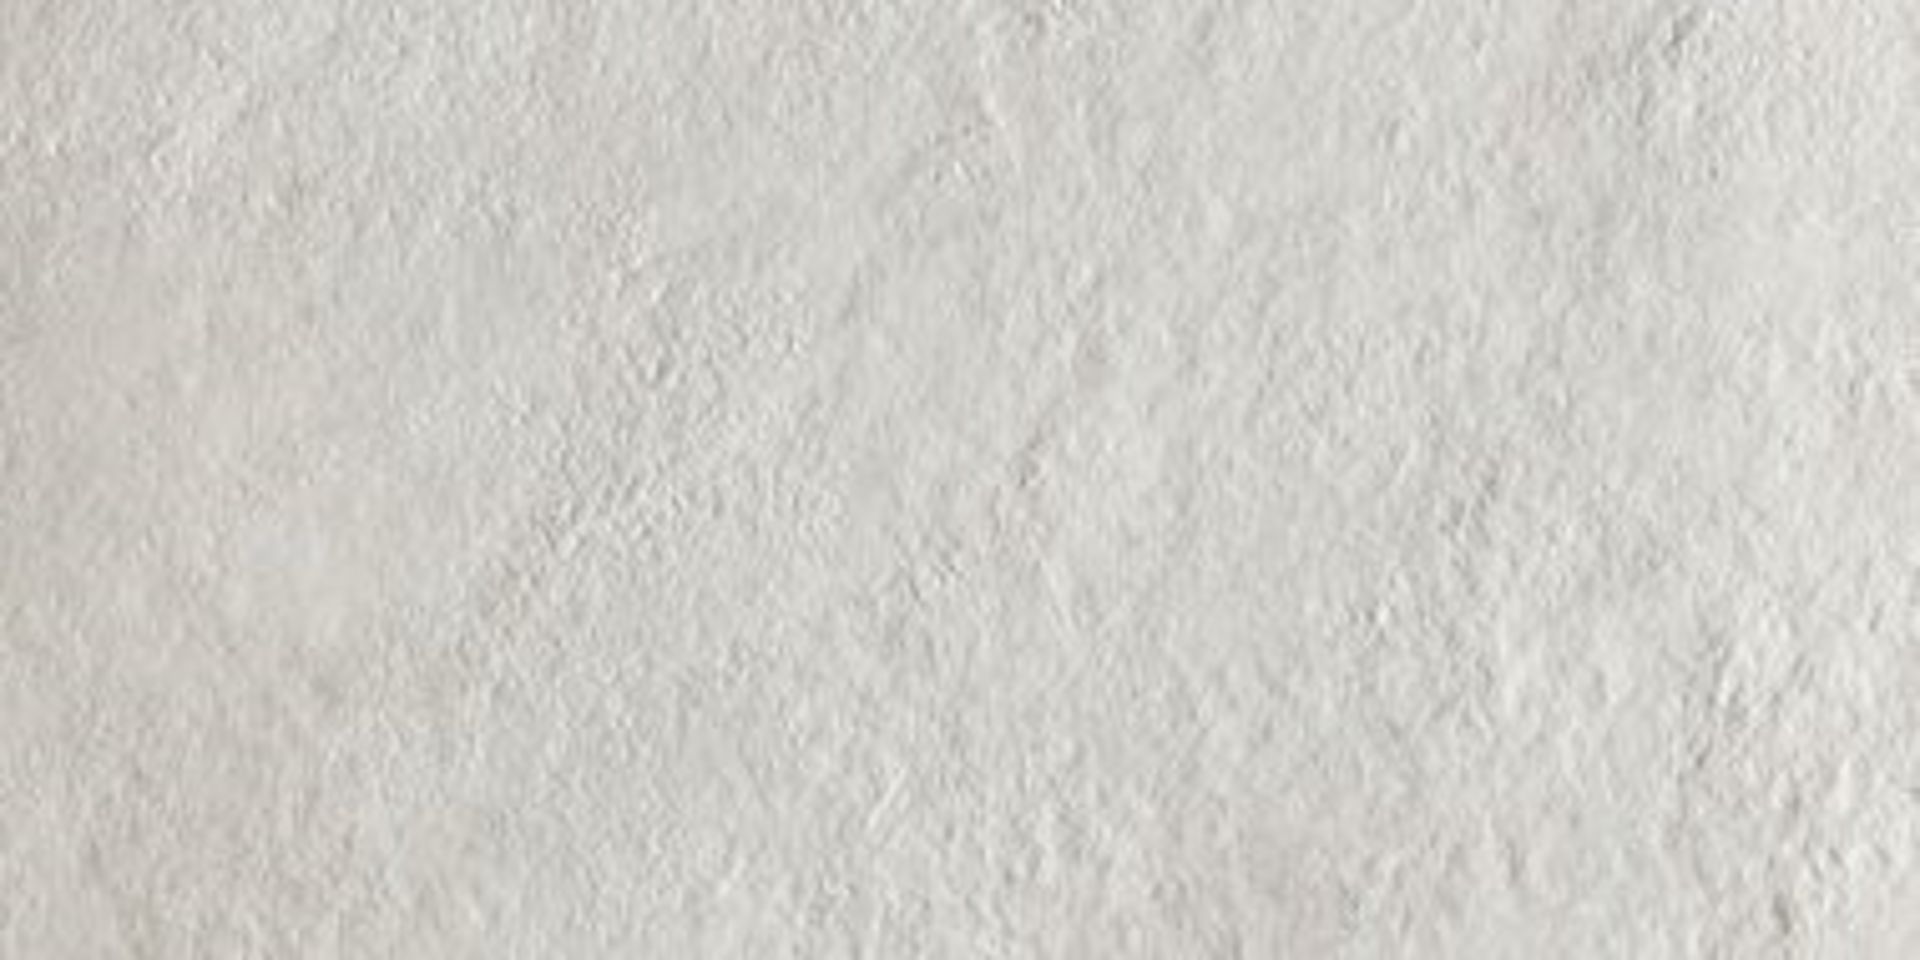 16 x Boxes of RAK Porcelain Floor or Wall Tiles - Concrete Sand Design in Beige - 30 x 60